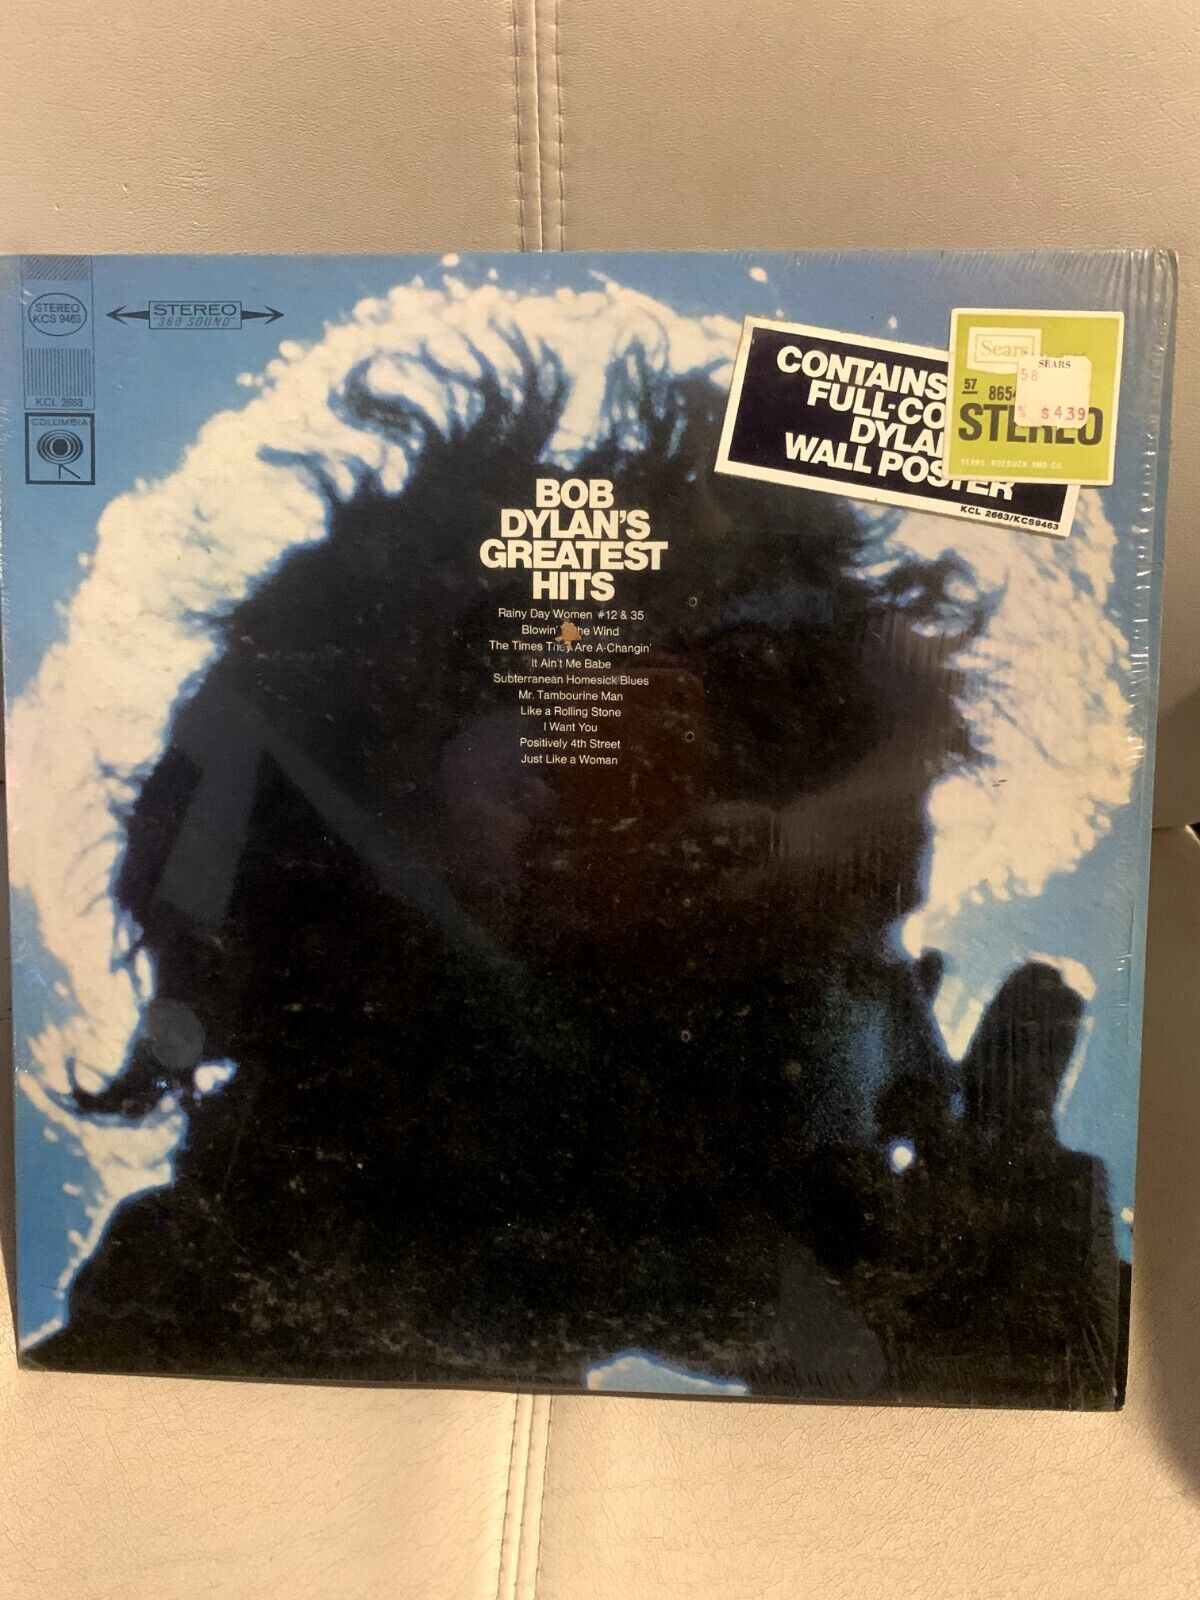 Bob Dylan's Greatest Hits - 1967 Vinyl LP